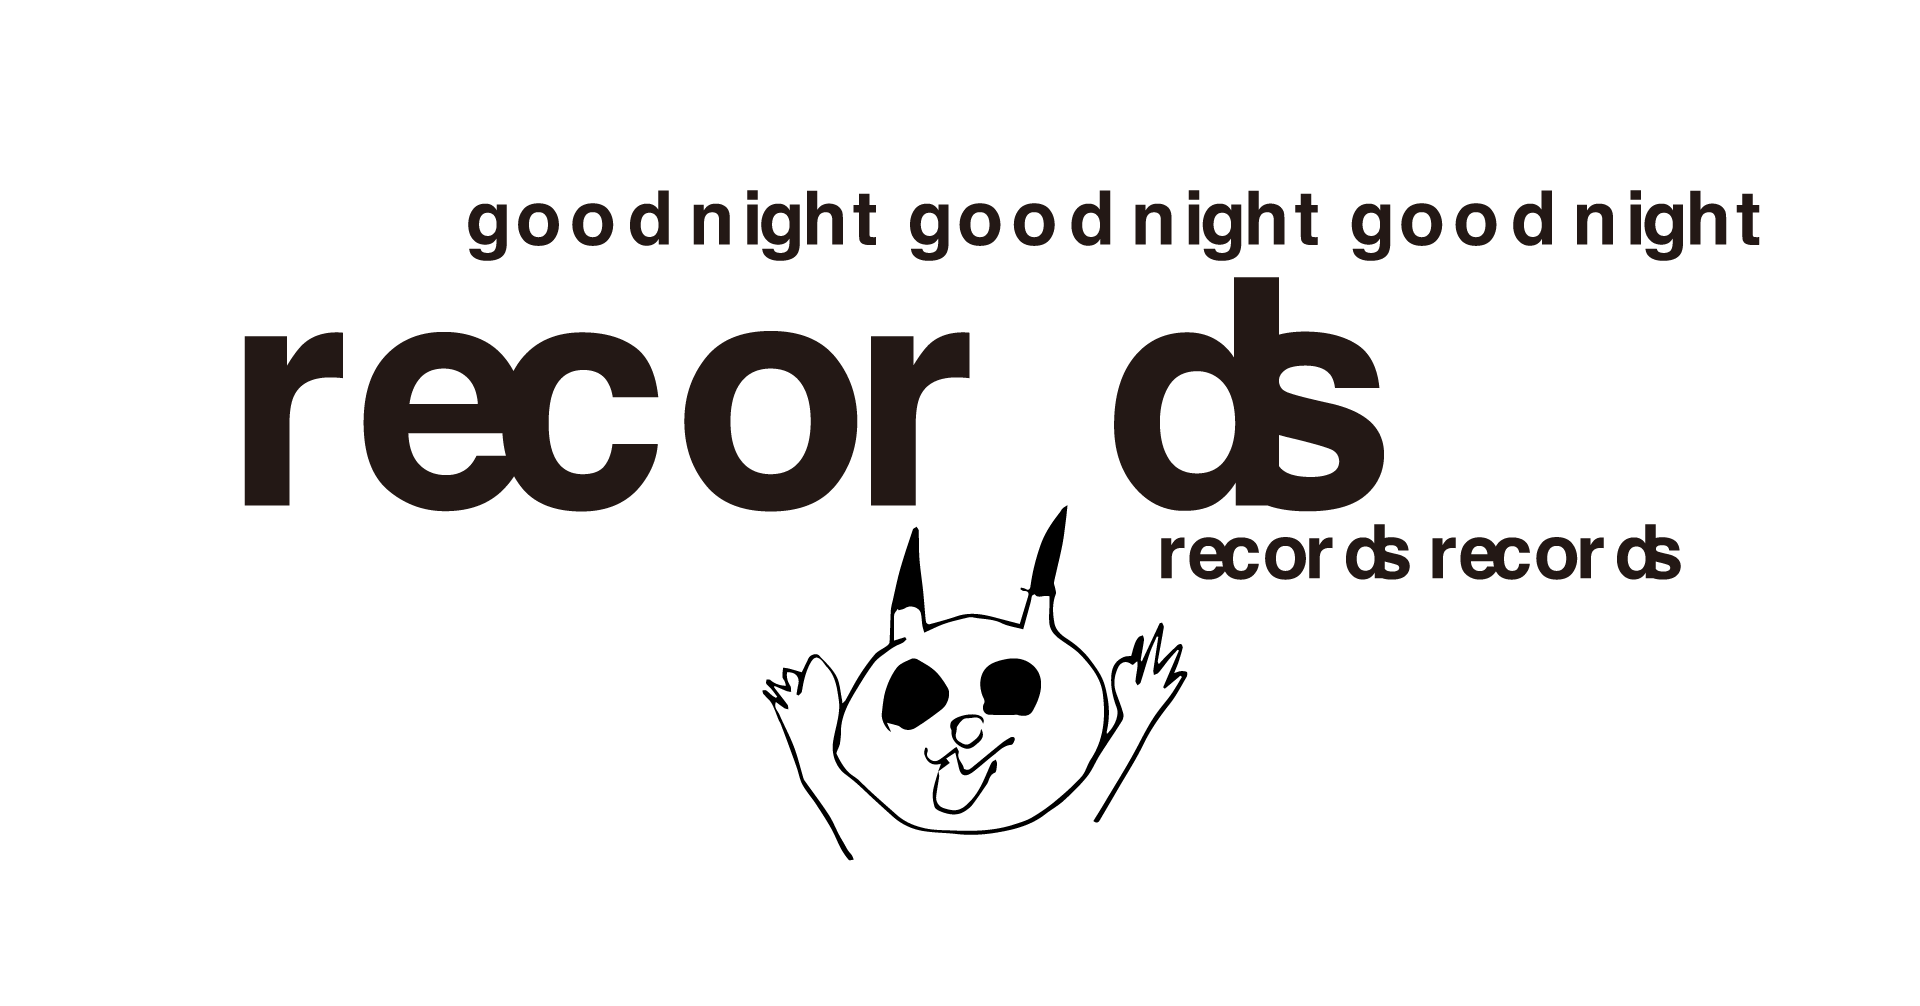 goodnight! records